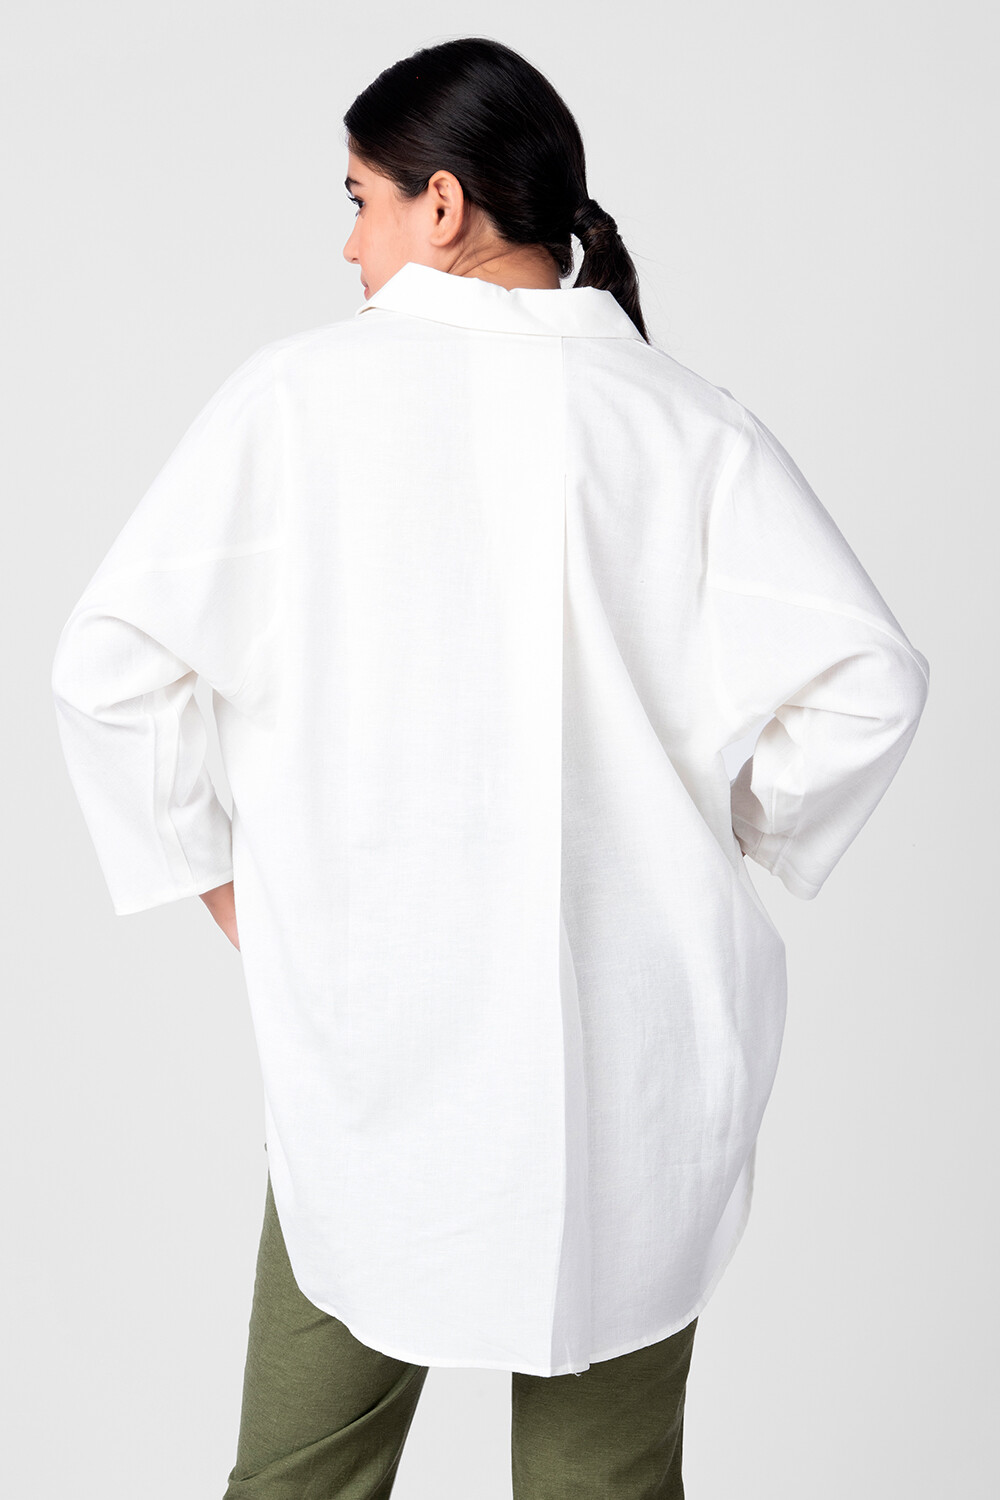 Camisa Sangiuliano Marfil / Off White